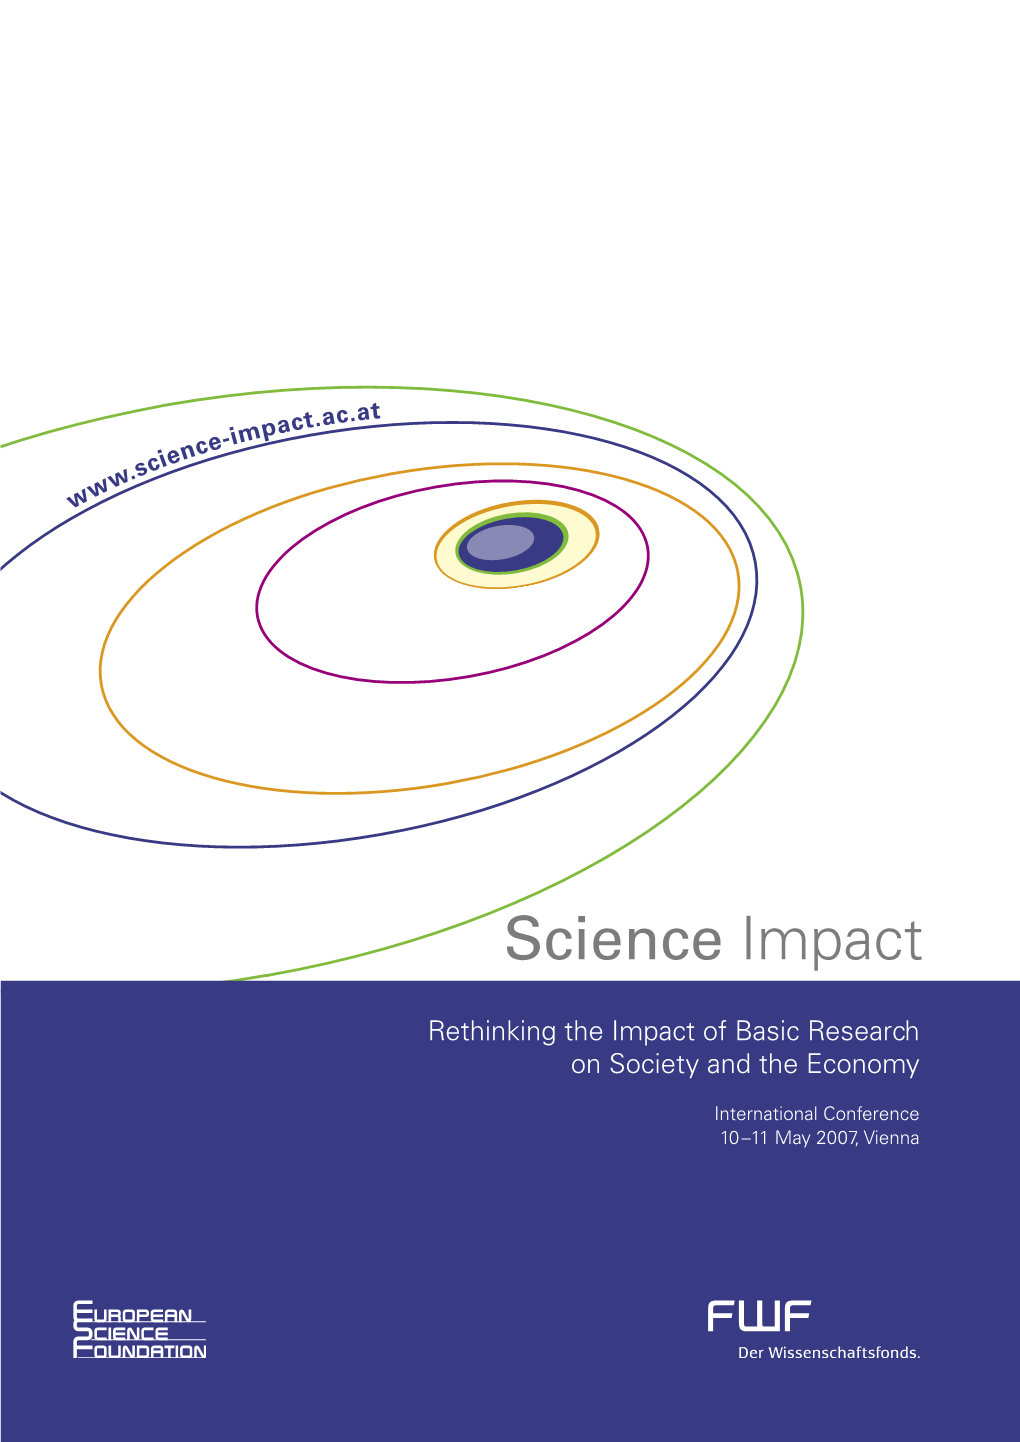 Science Impact Brochure